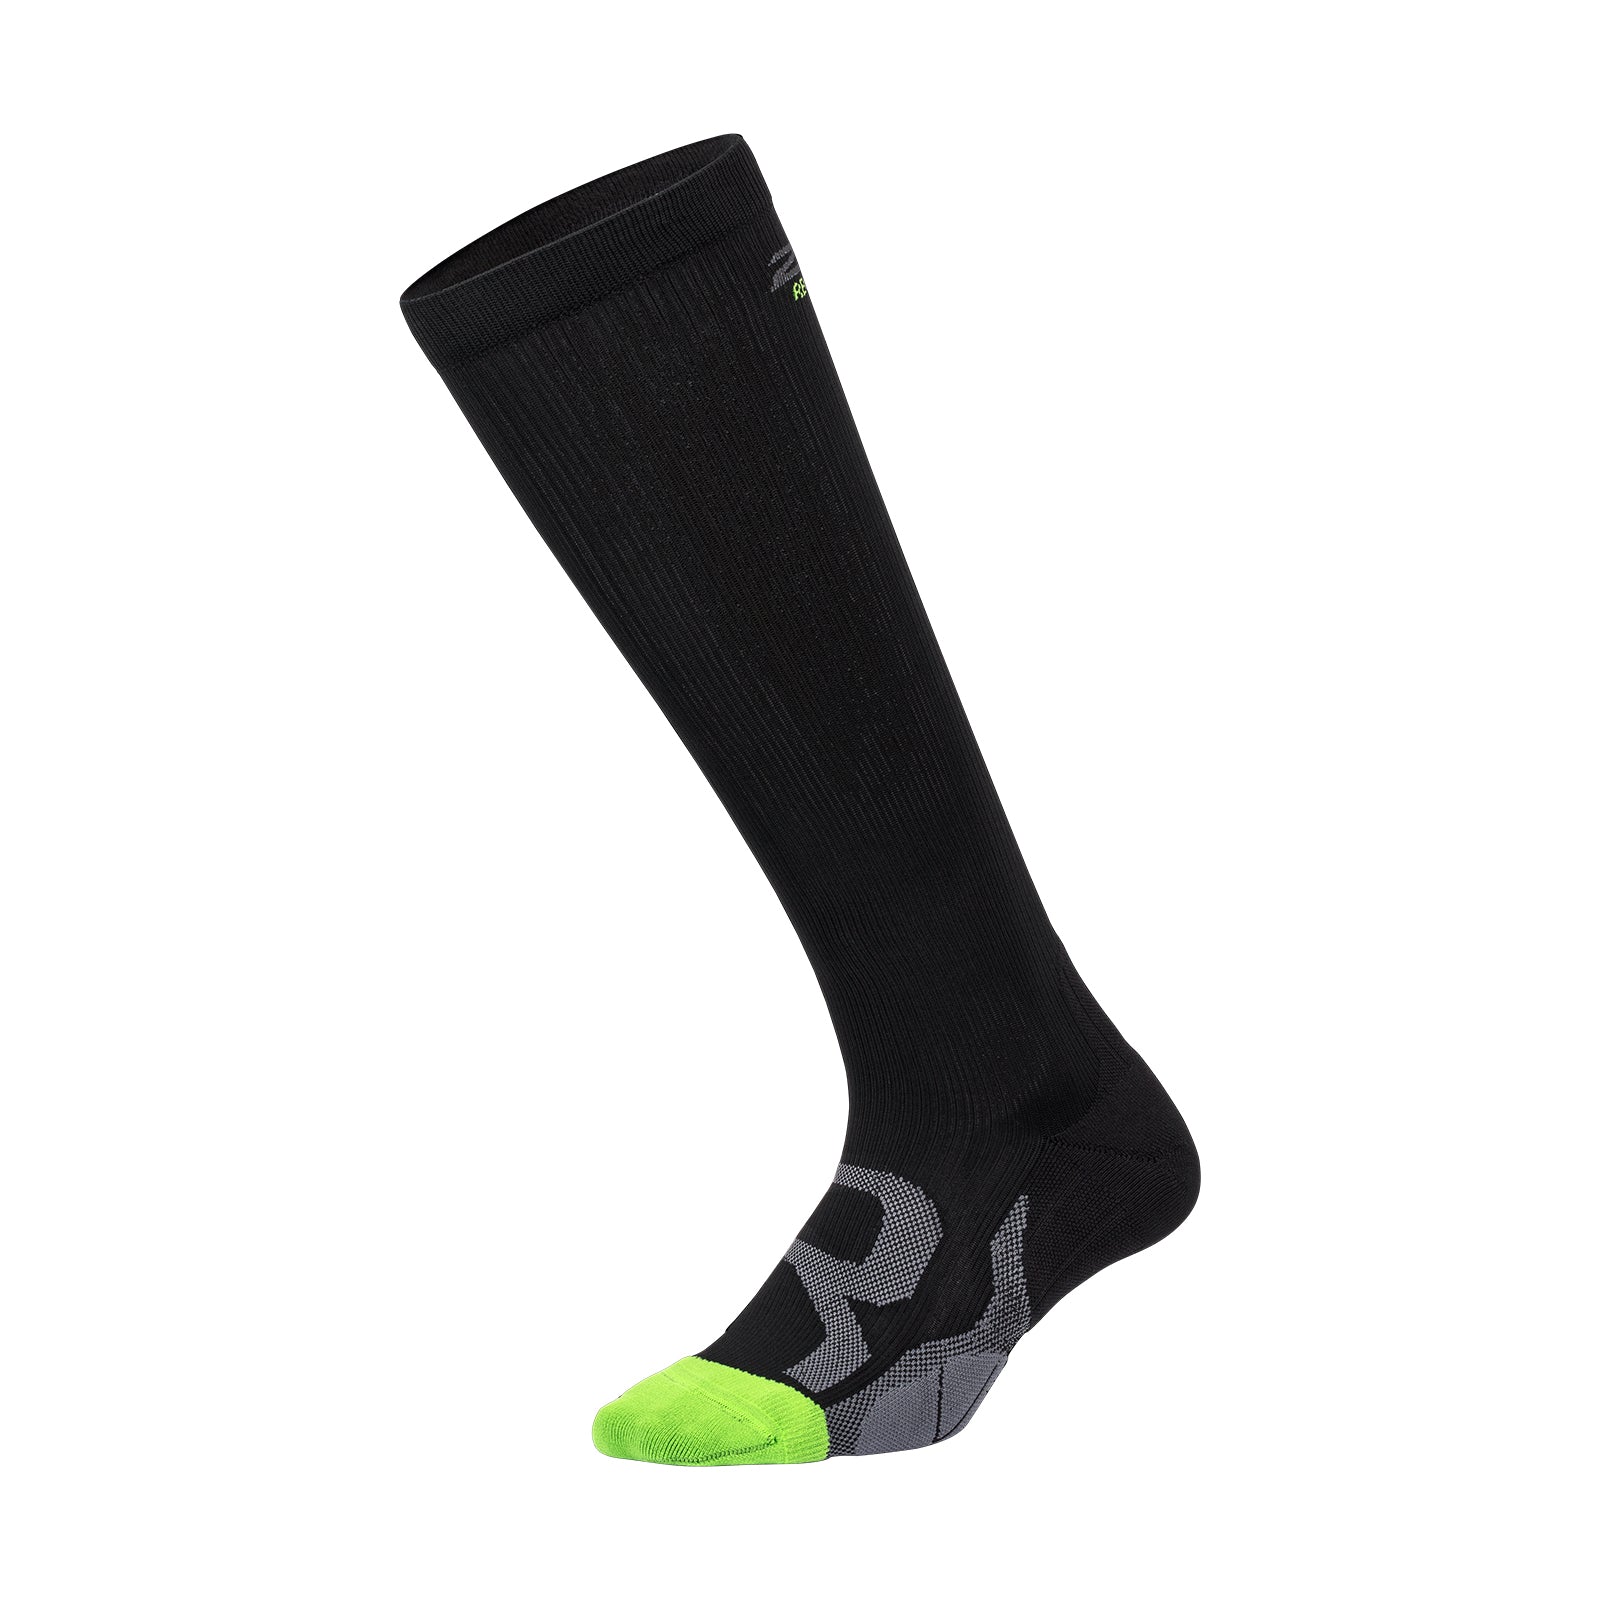 Kompressionssocken Compression Socks for Recovery